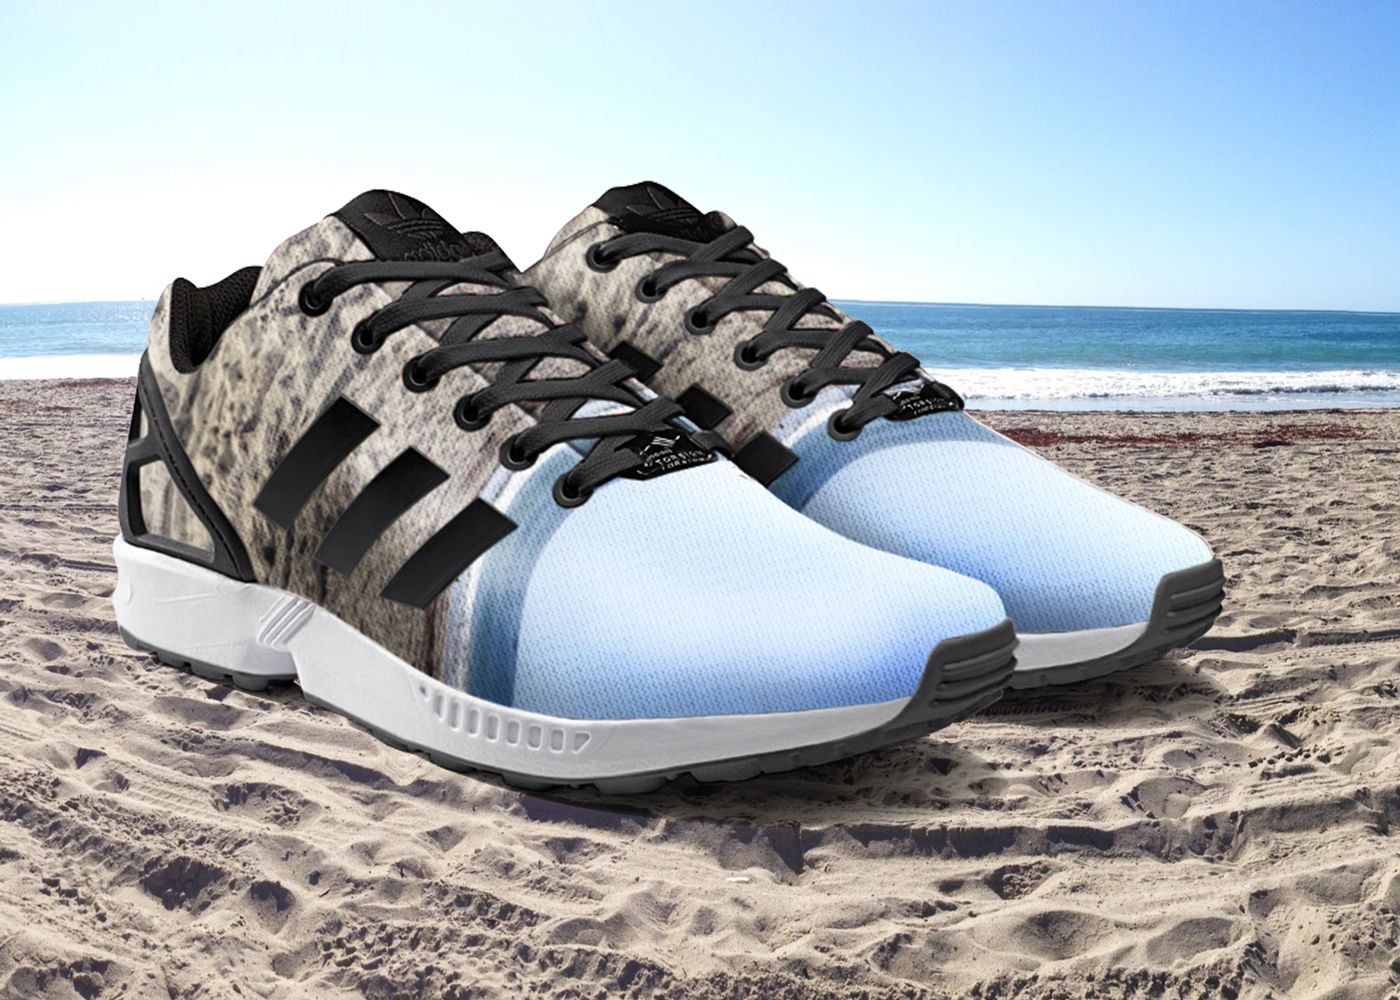 App lets customize Adidas sneakers photos | CNN Business